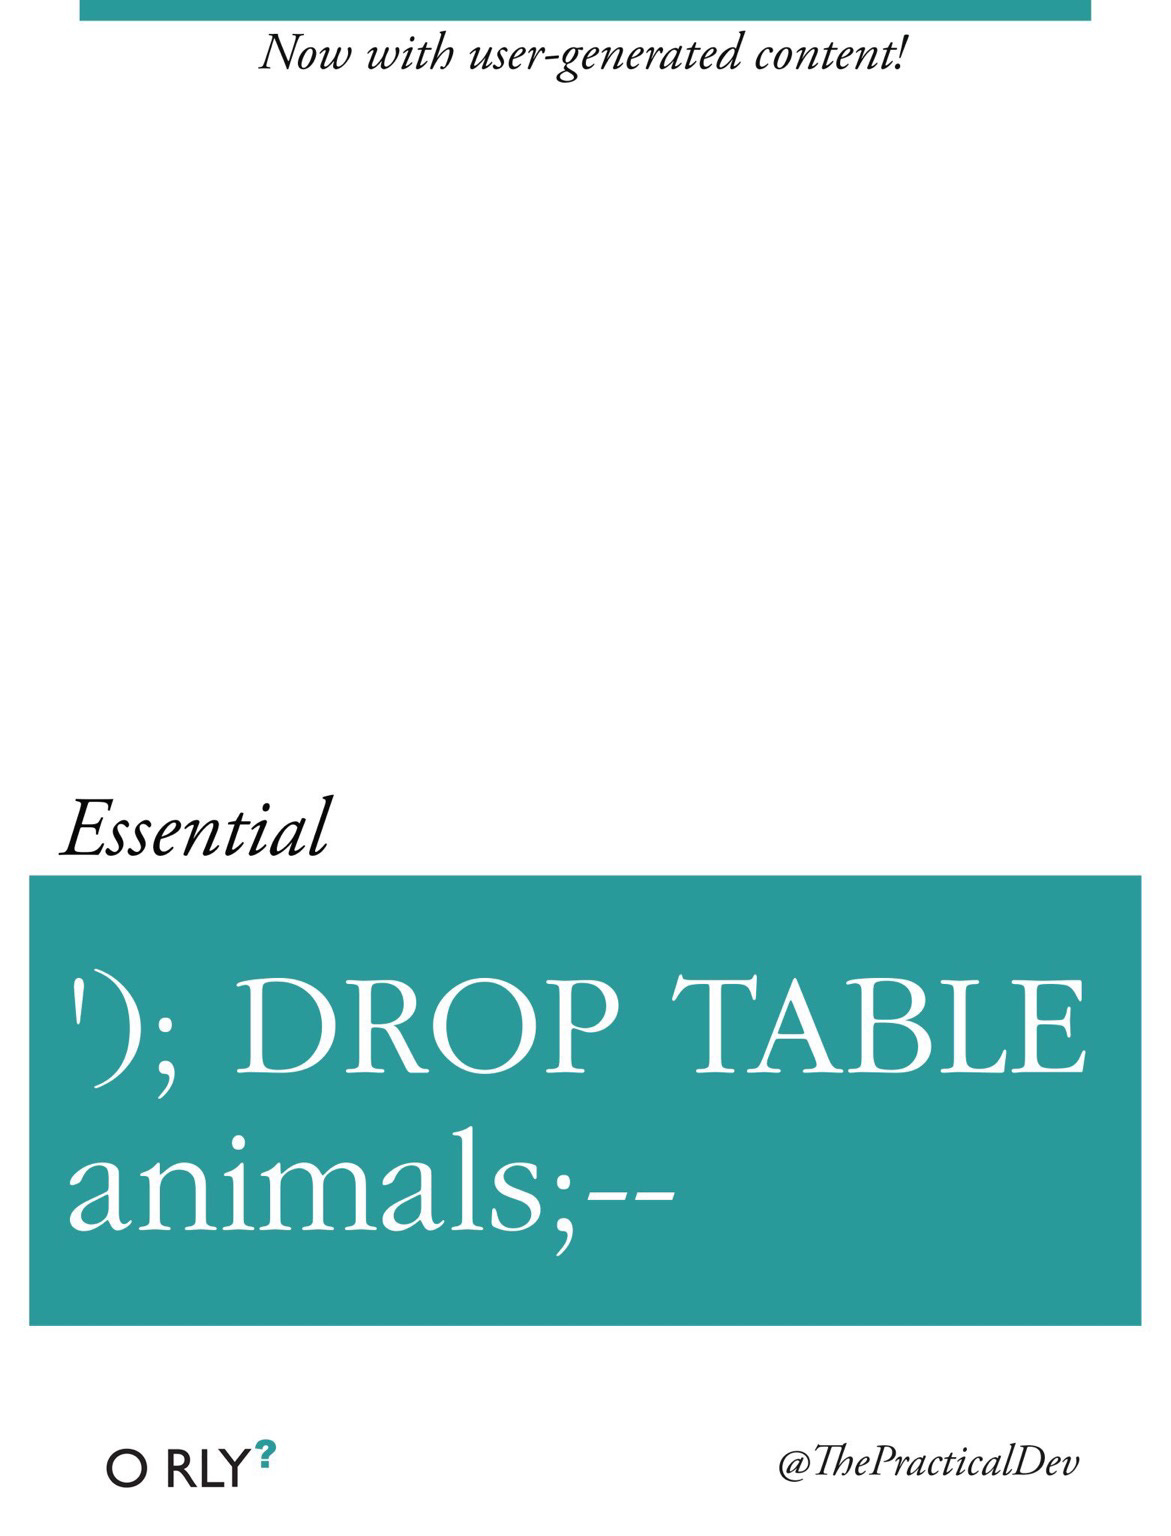 ‘); DROP TABLE animals;—